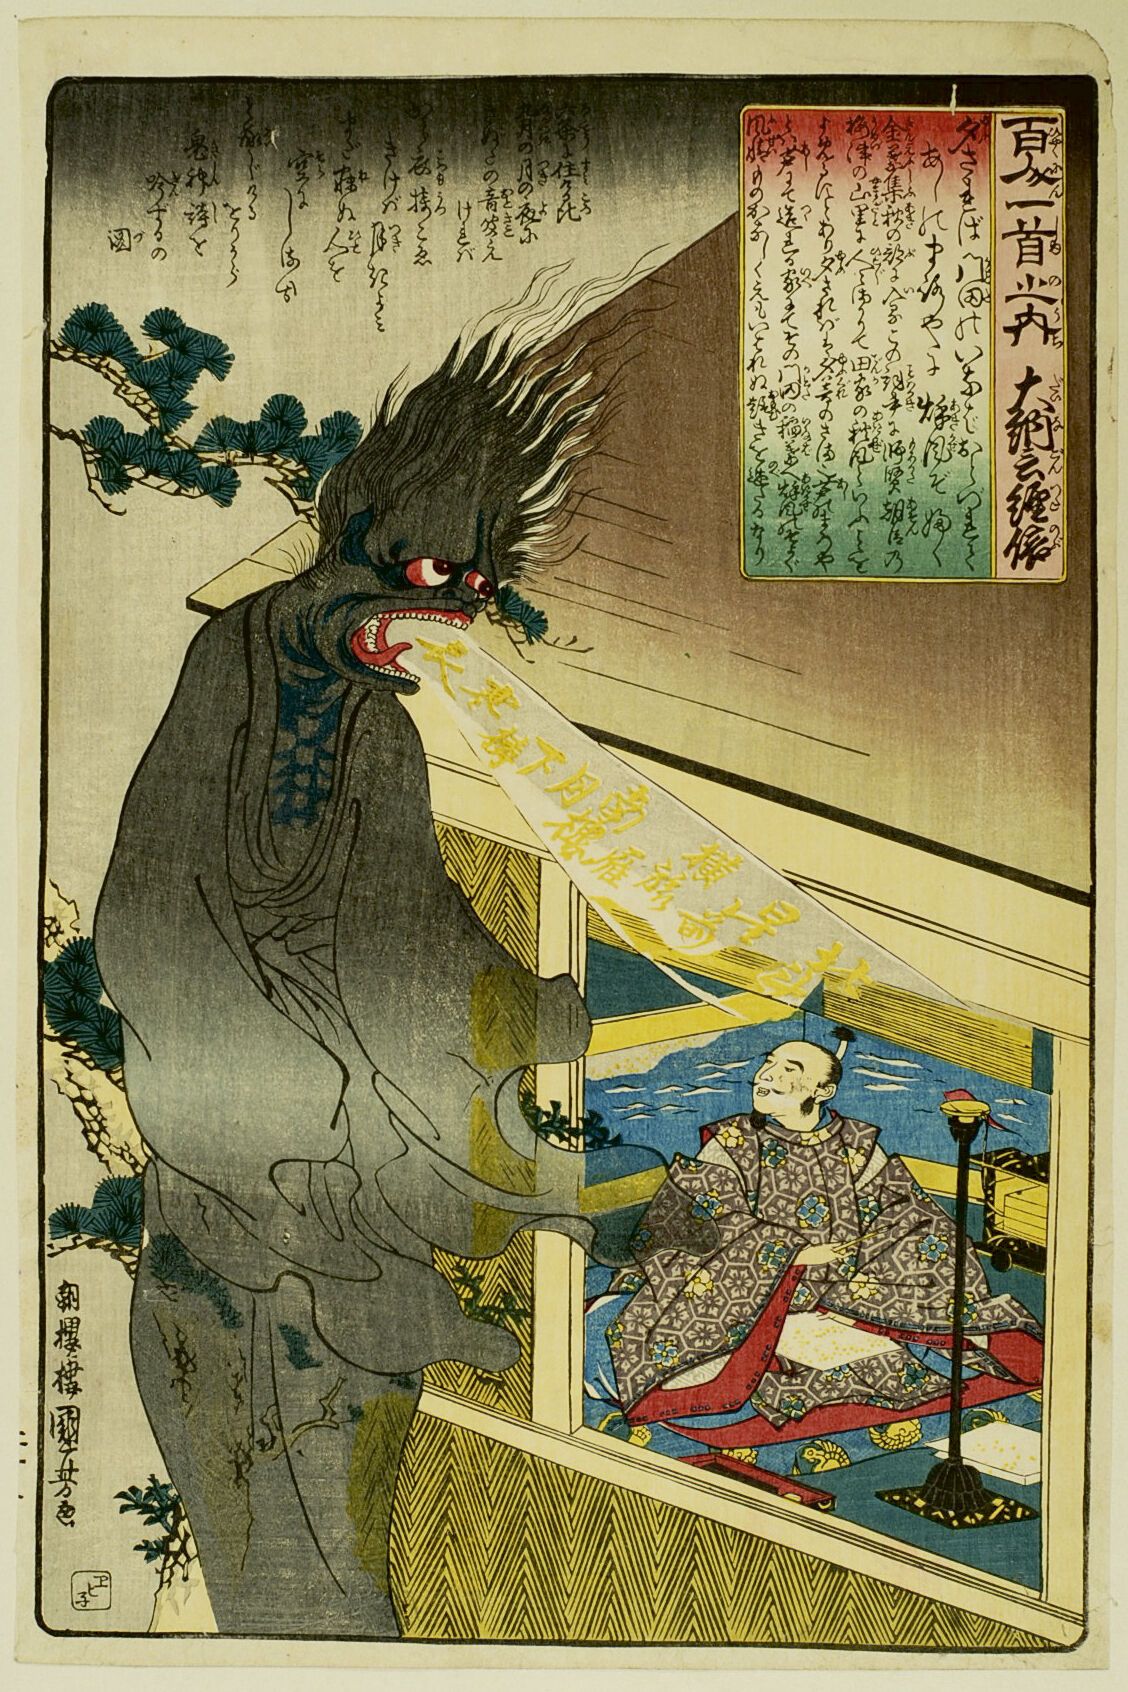 Null 宇多川国义 (1797-1861)
百人一首》系列中的 "Oban tate-e"，板书 "Dainagon Tsunenobu"，诗人在他的书房看到&hellip;